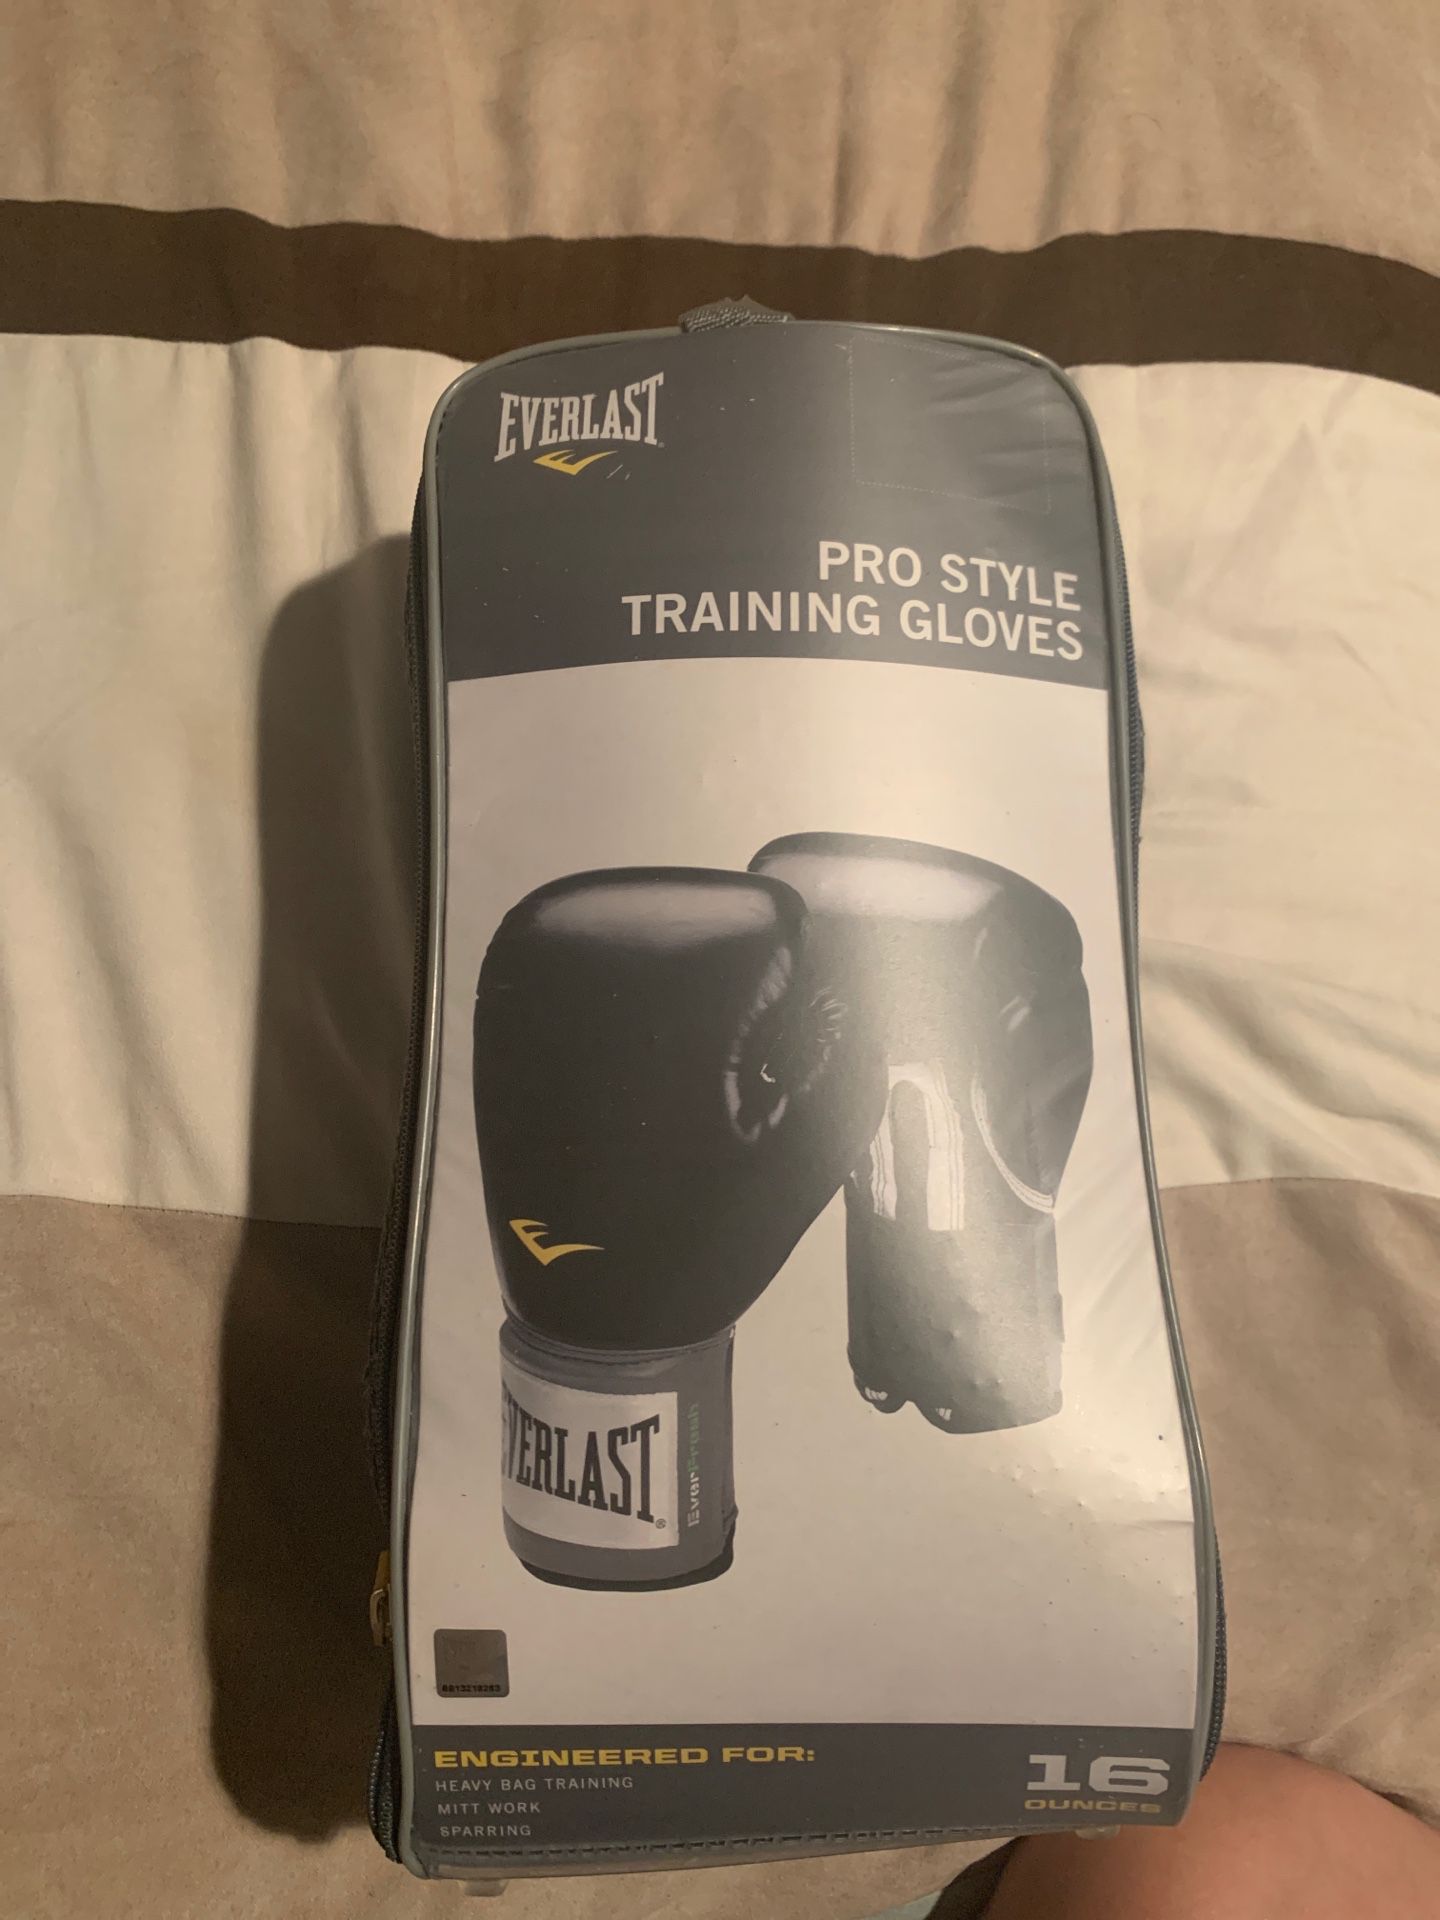 Brand new boxing gloves